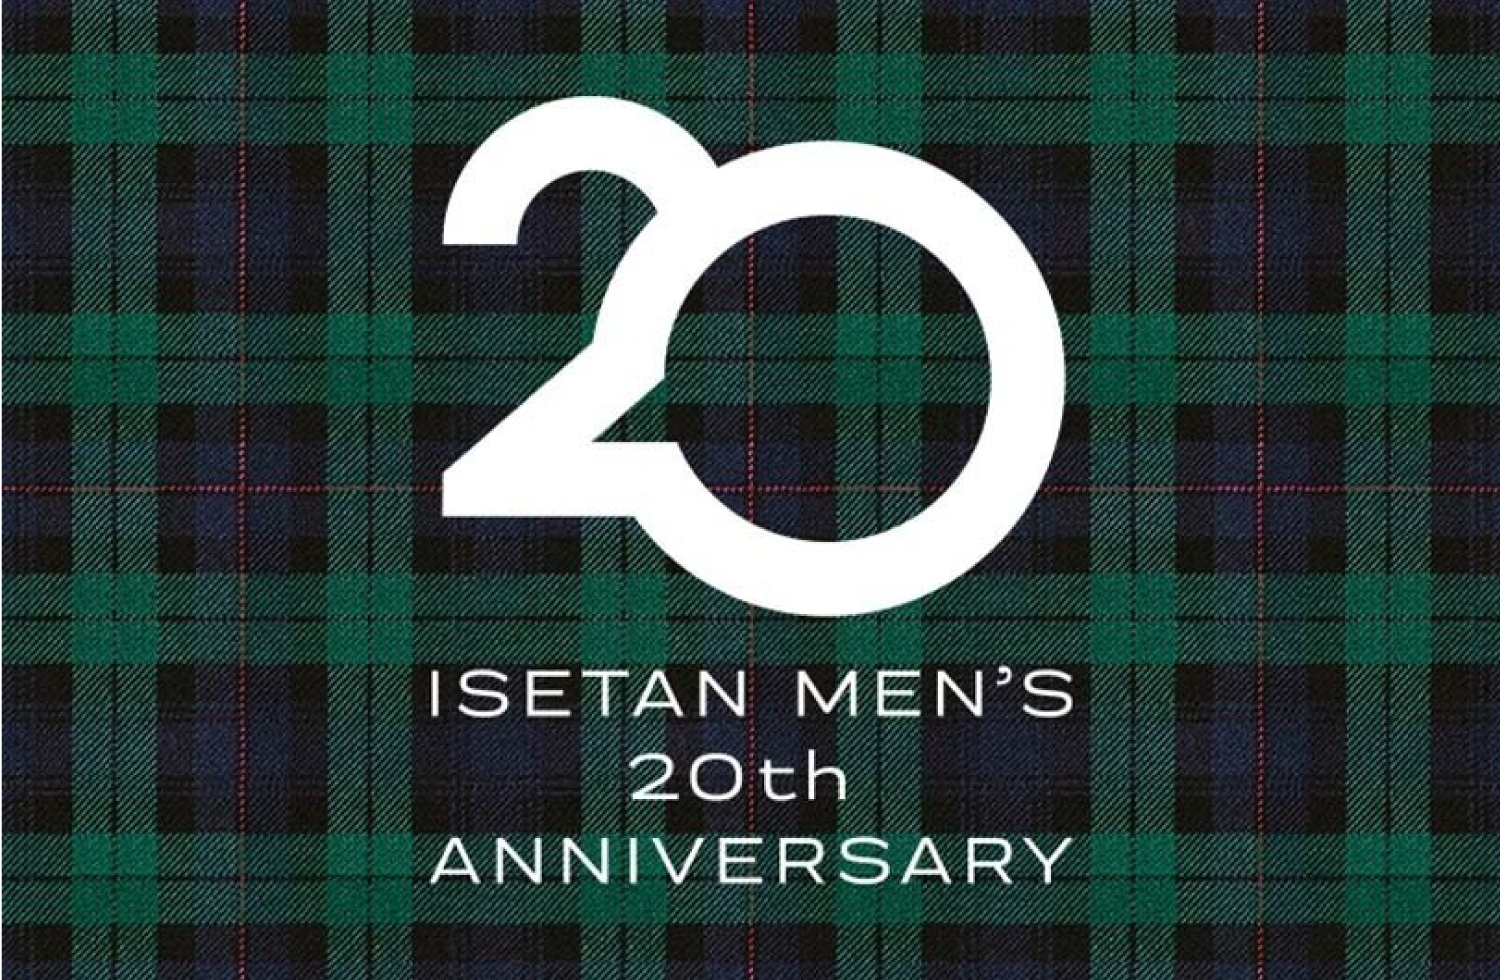 The celebration message for ISETAN MEN'S 20th